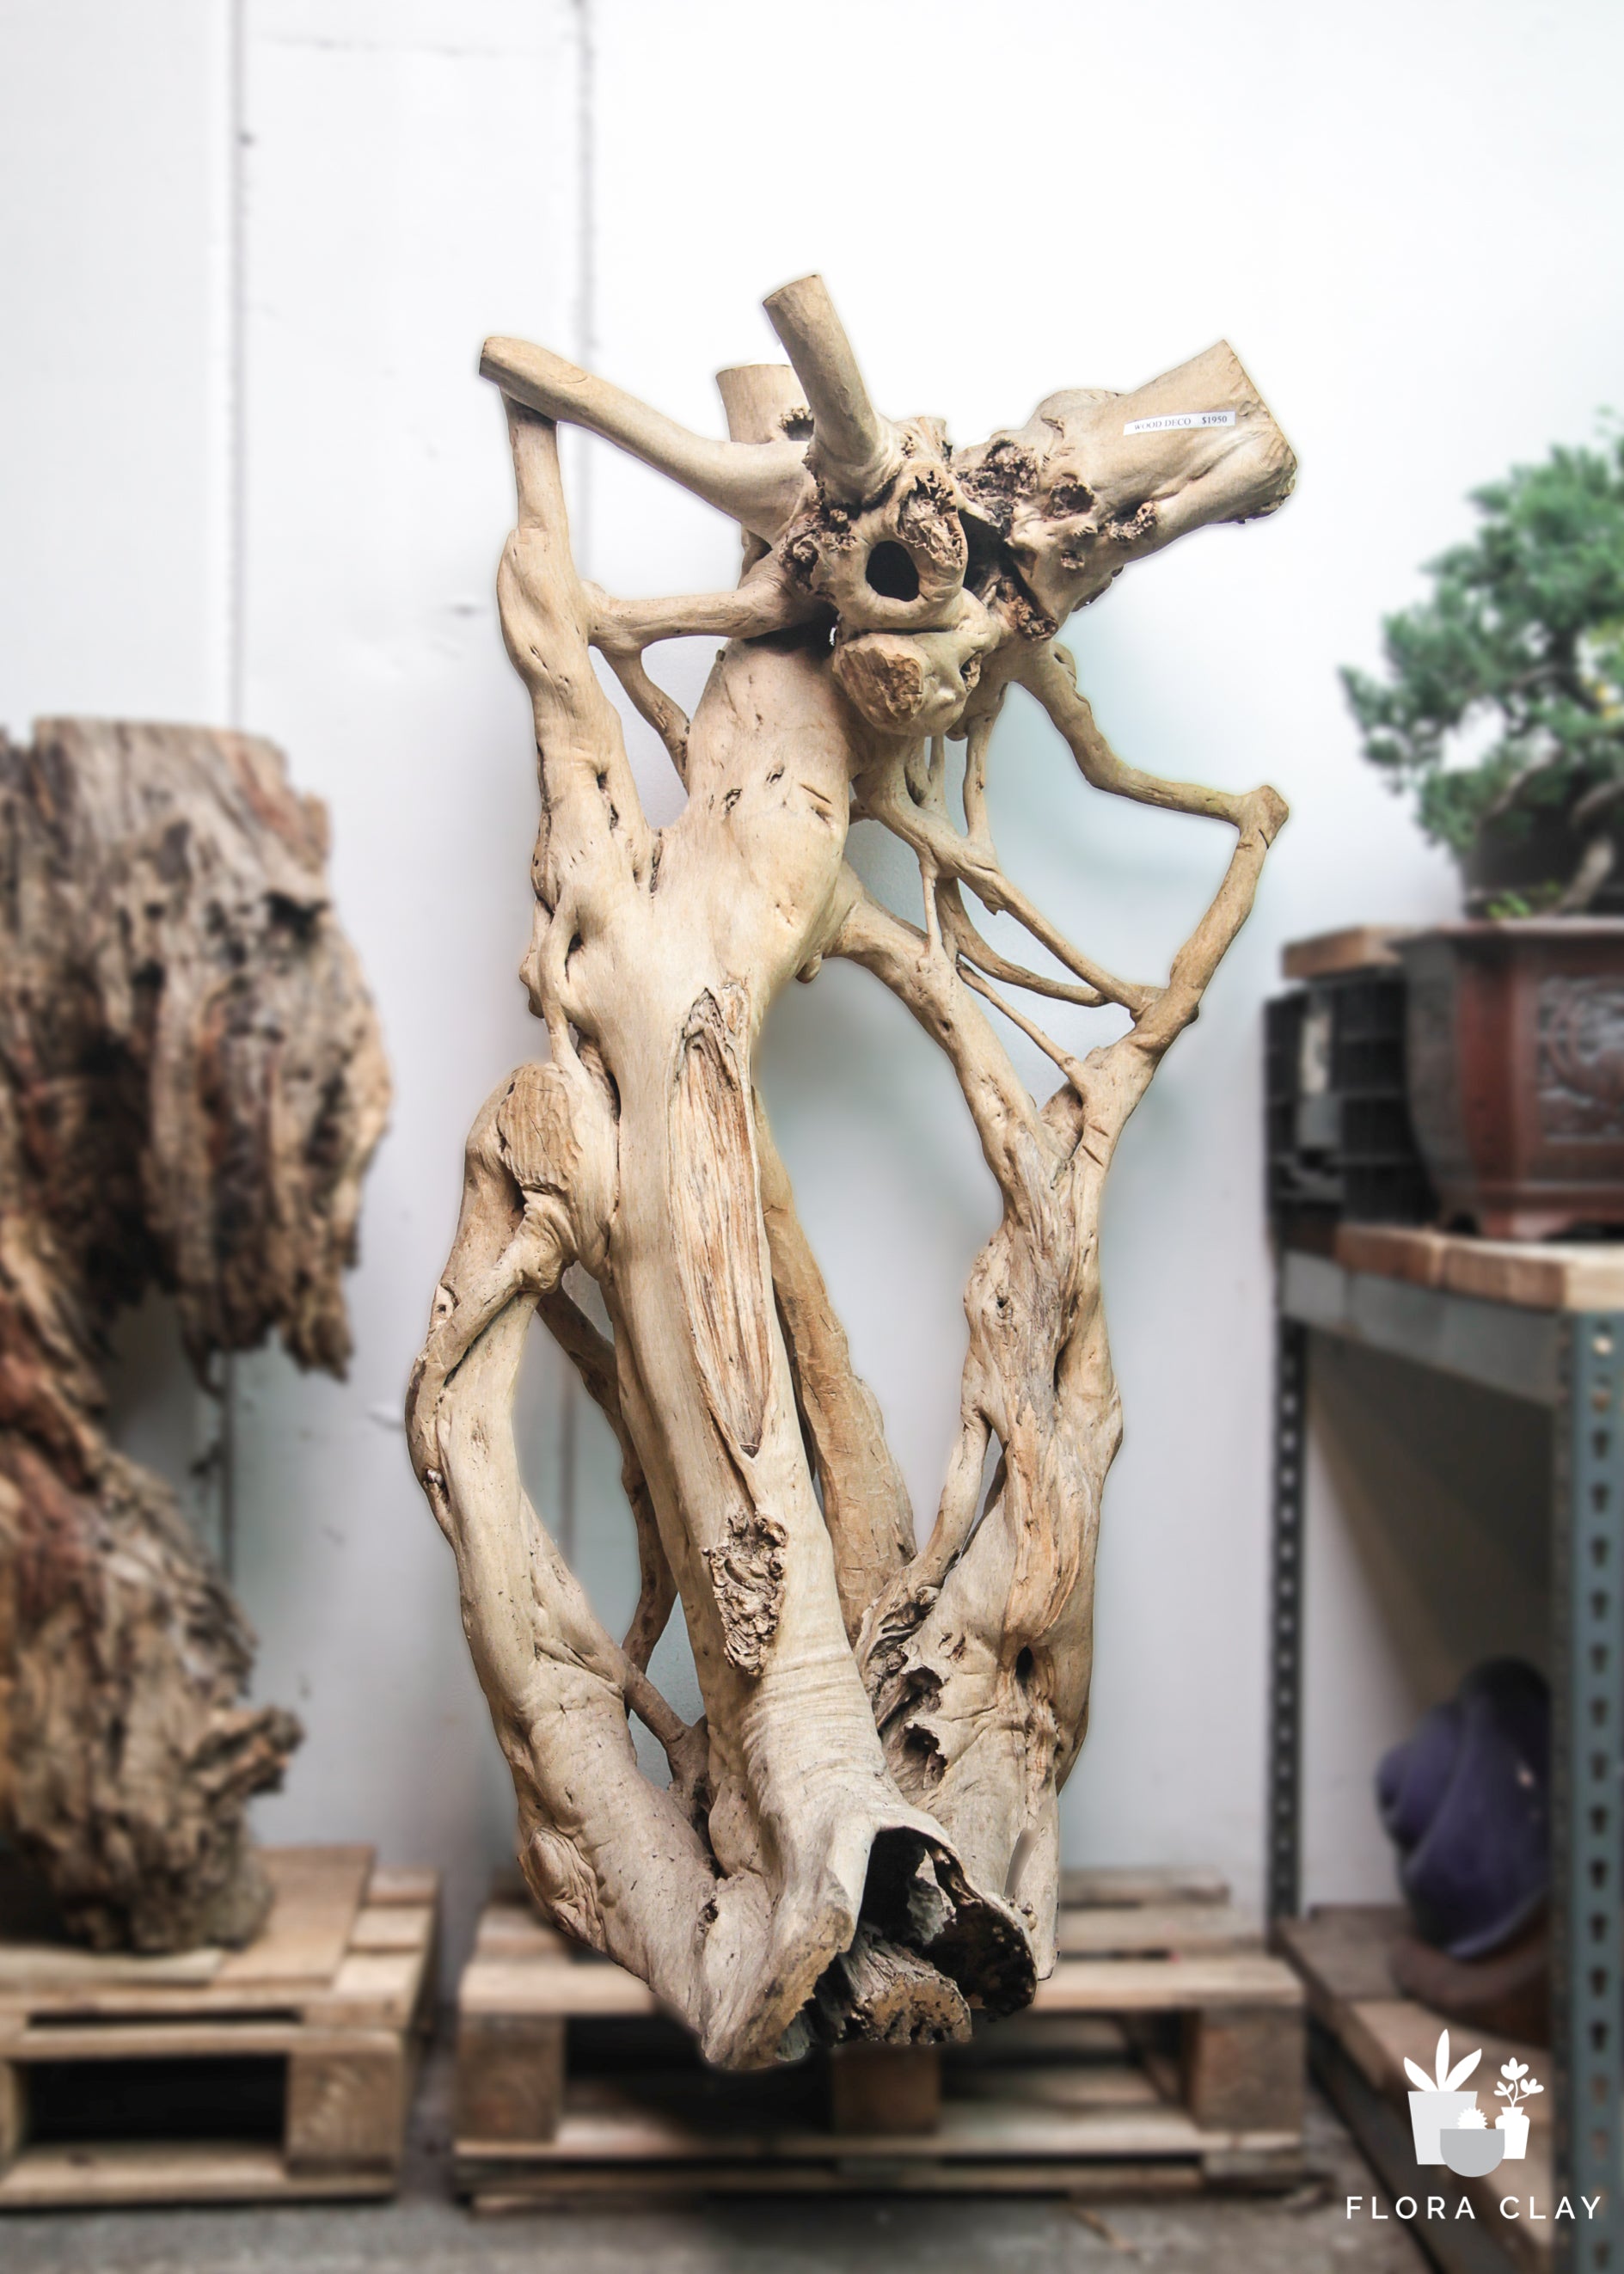 Natural Wood Sculpture 2